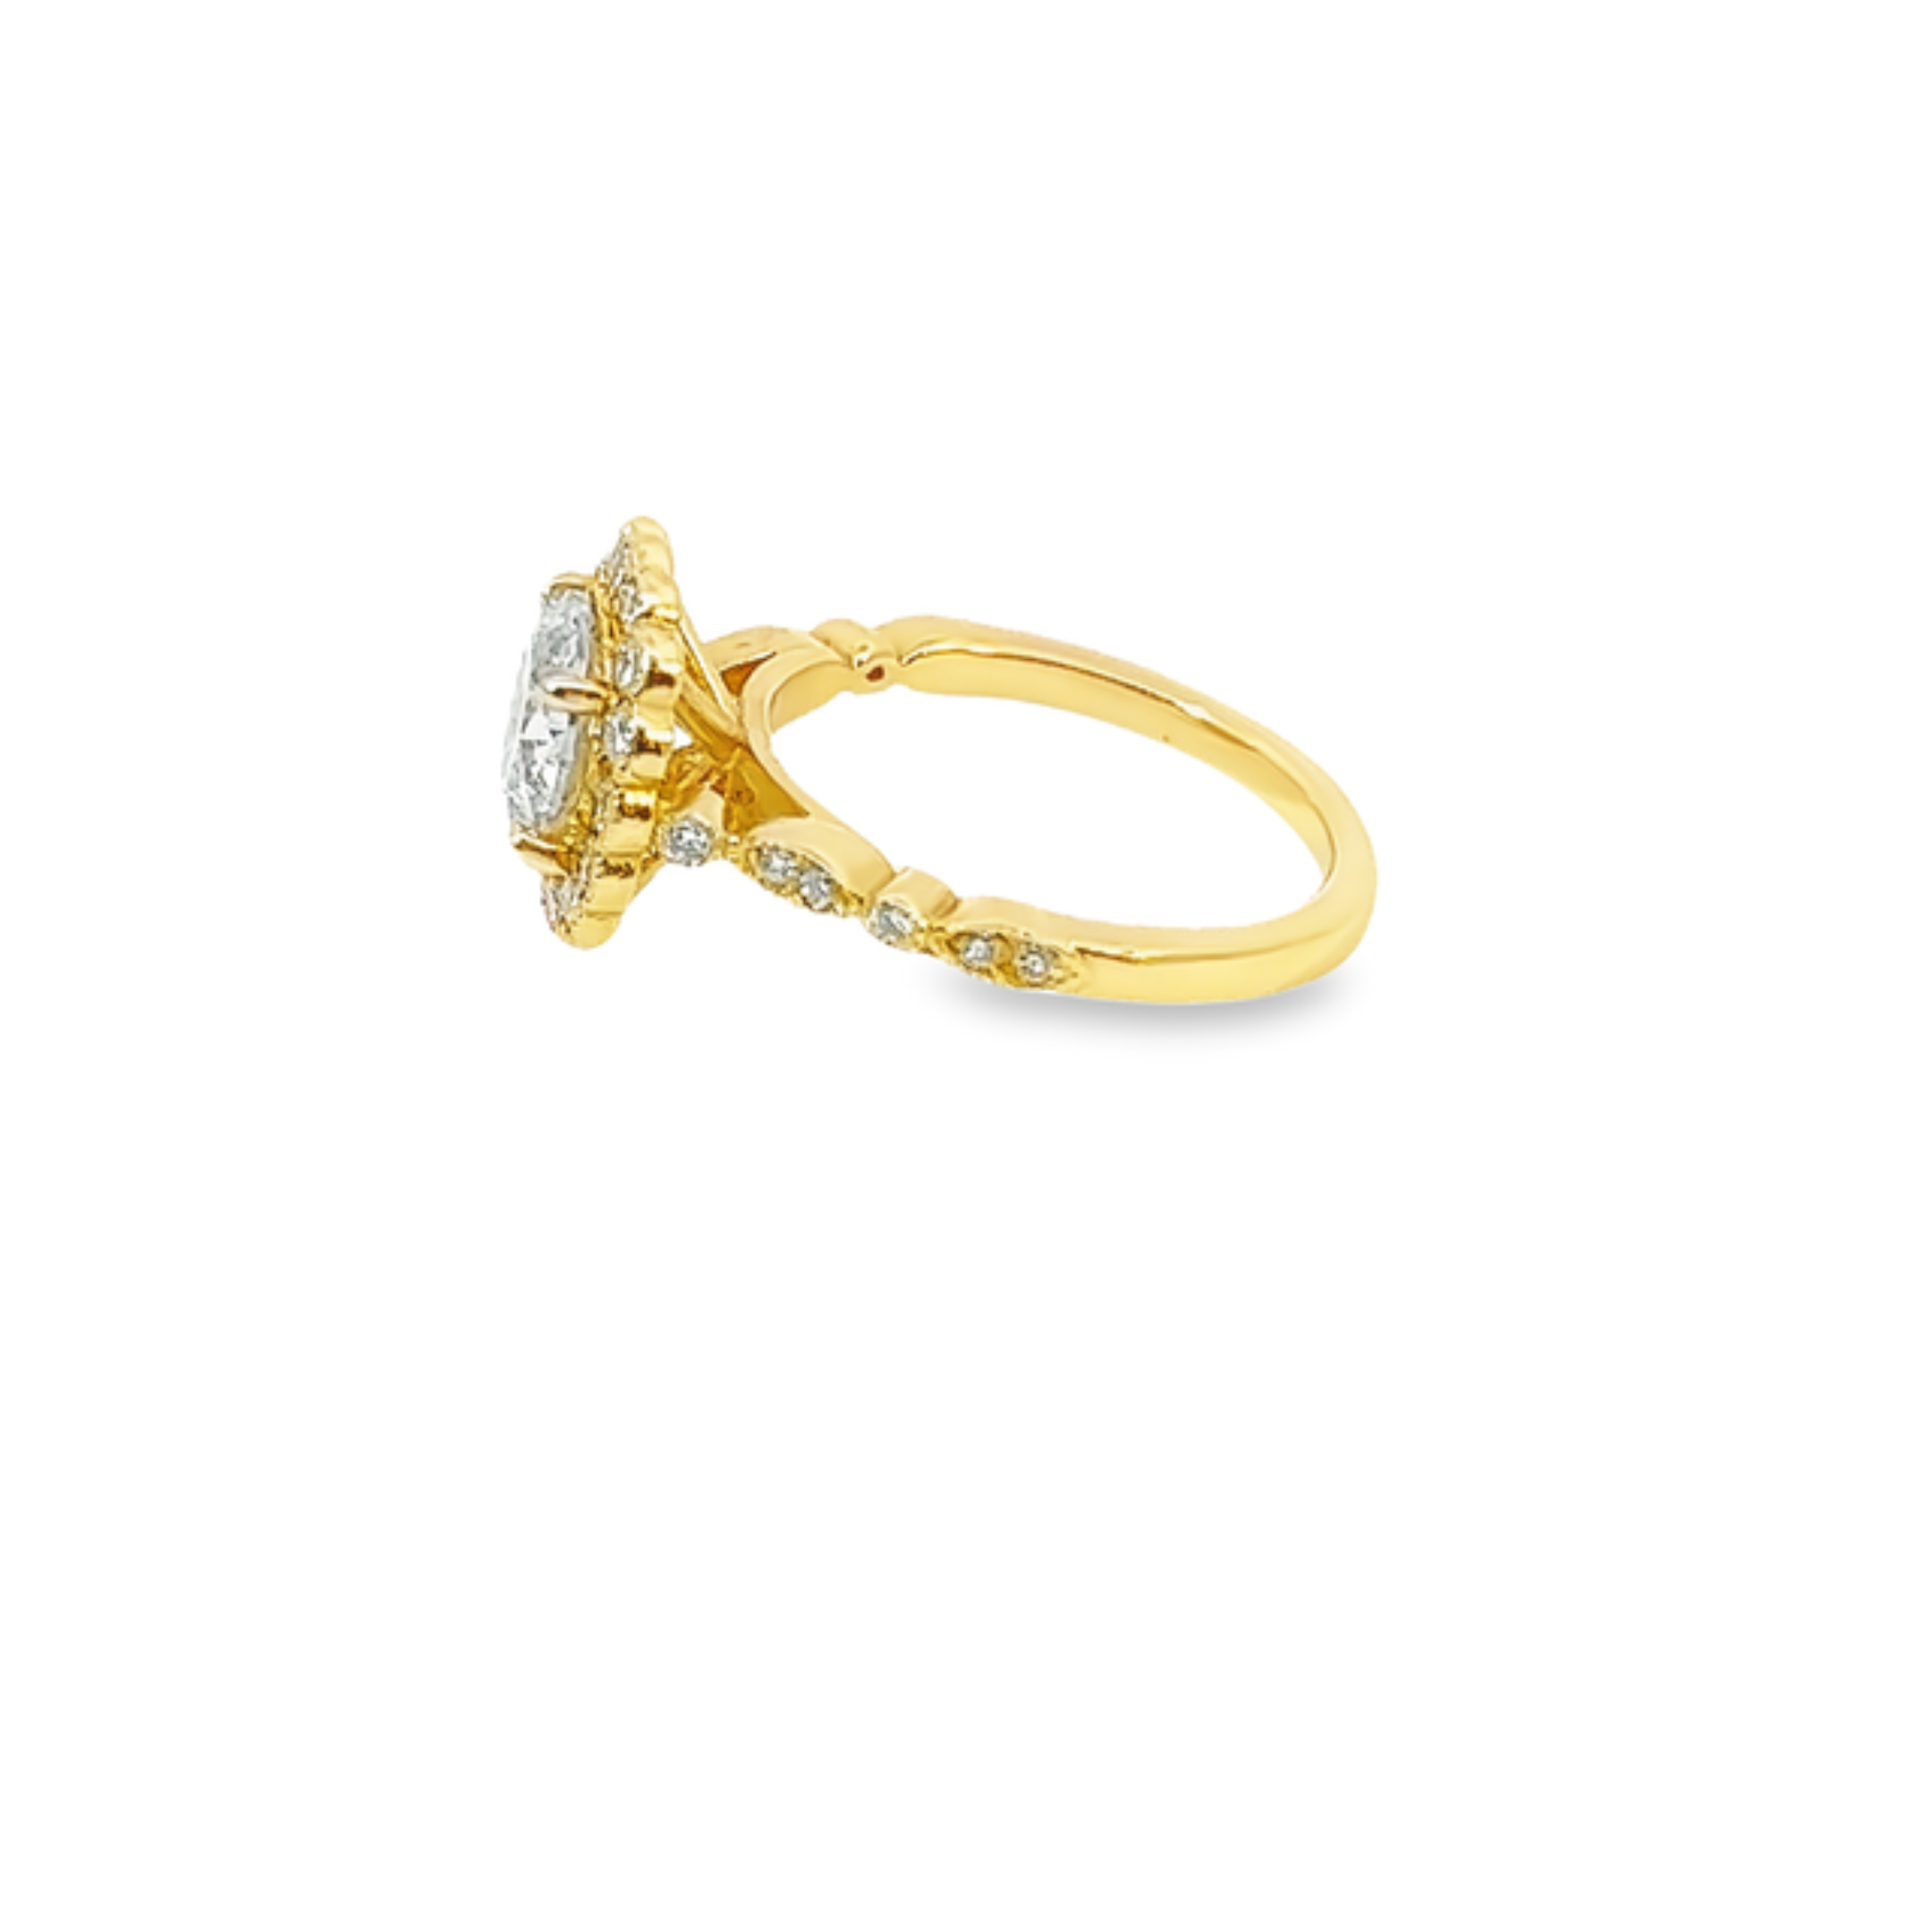 14k Yellow Gold Diamond Round Cut Halo Engagement Ring 1.60c